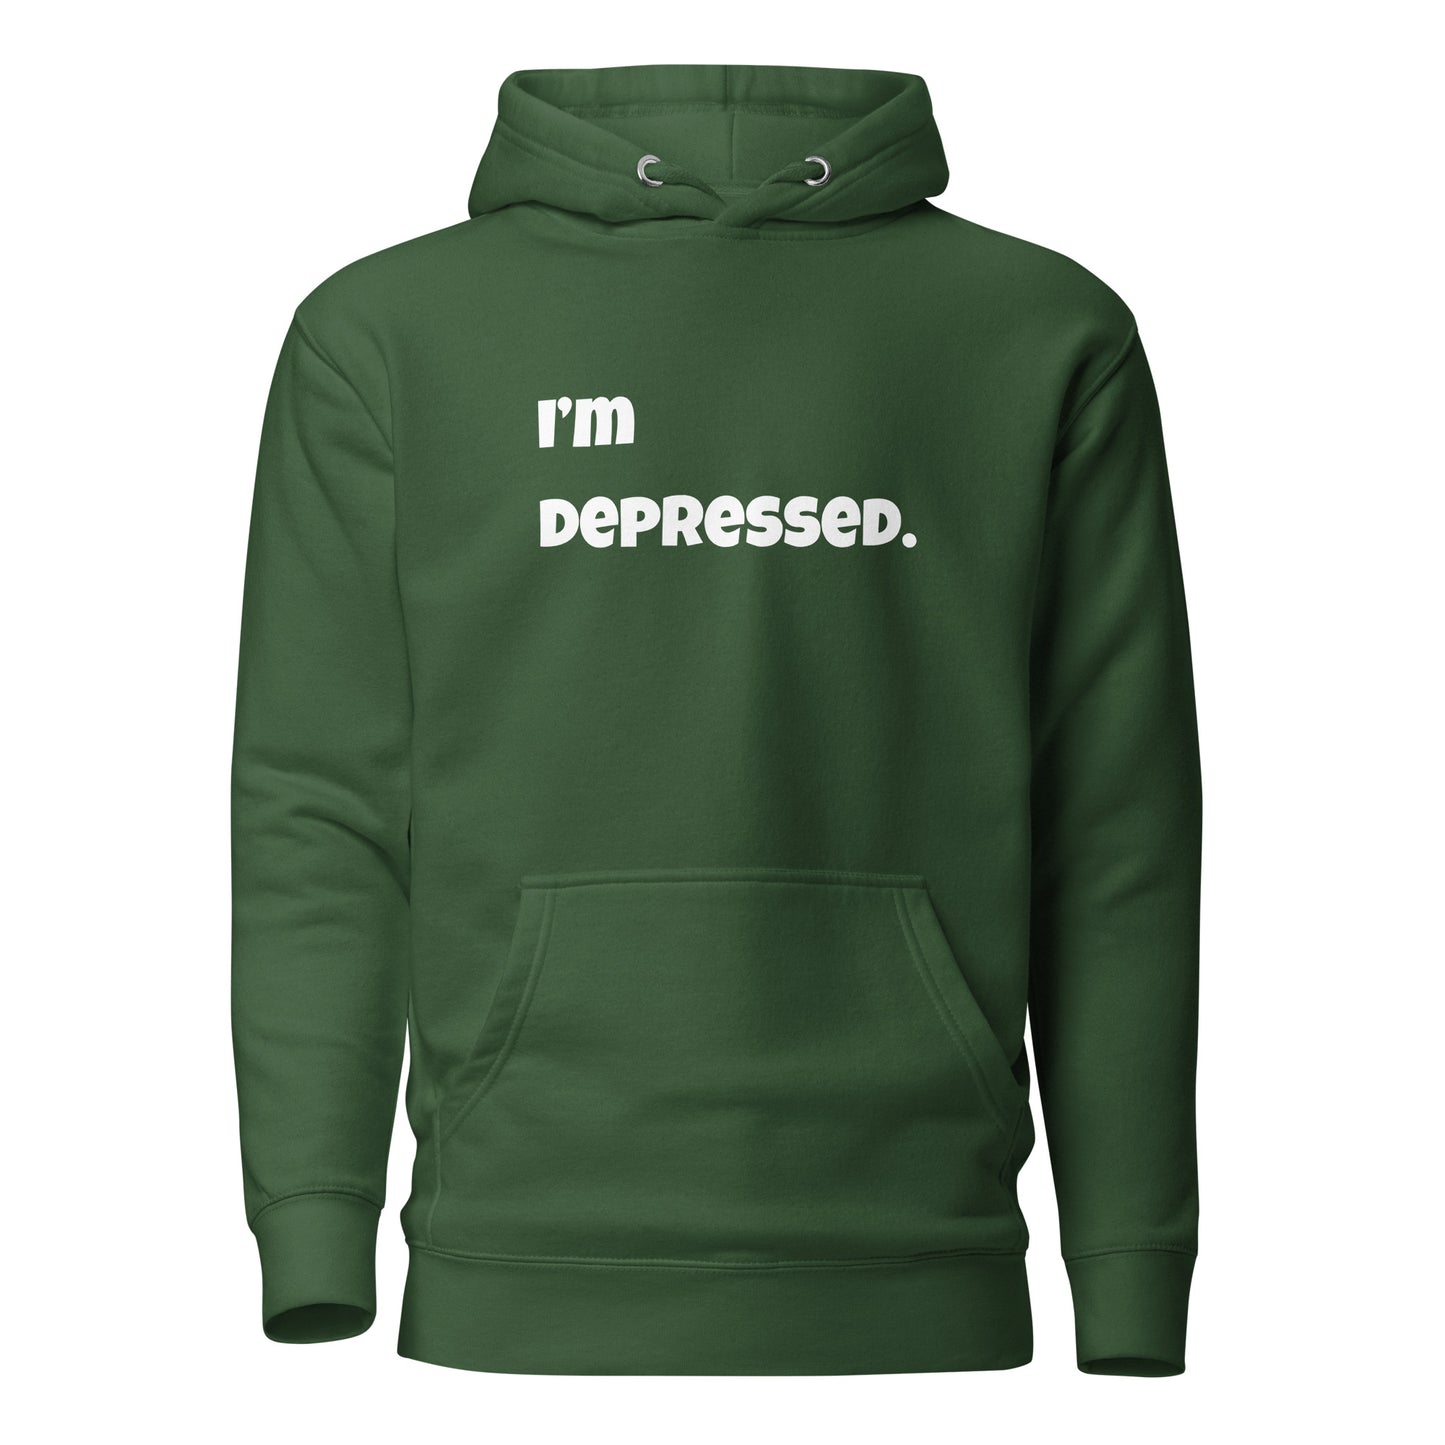 "I'm Depressed" Hoodie